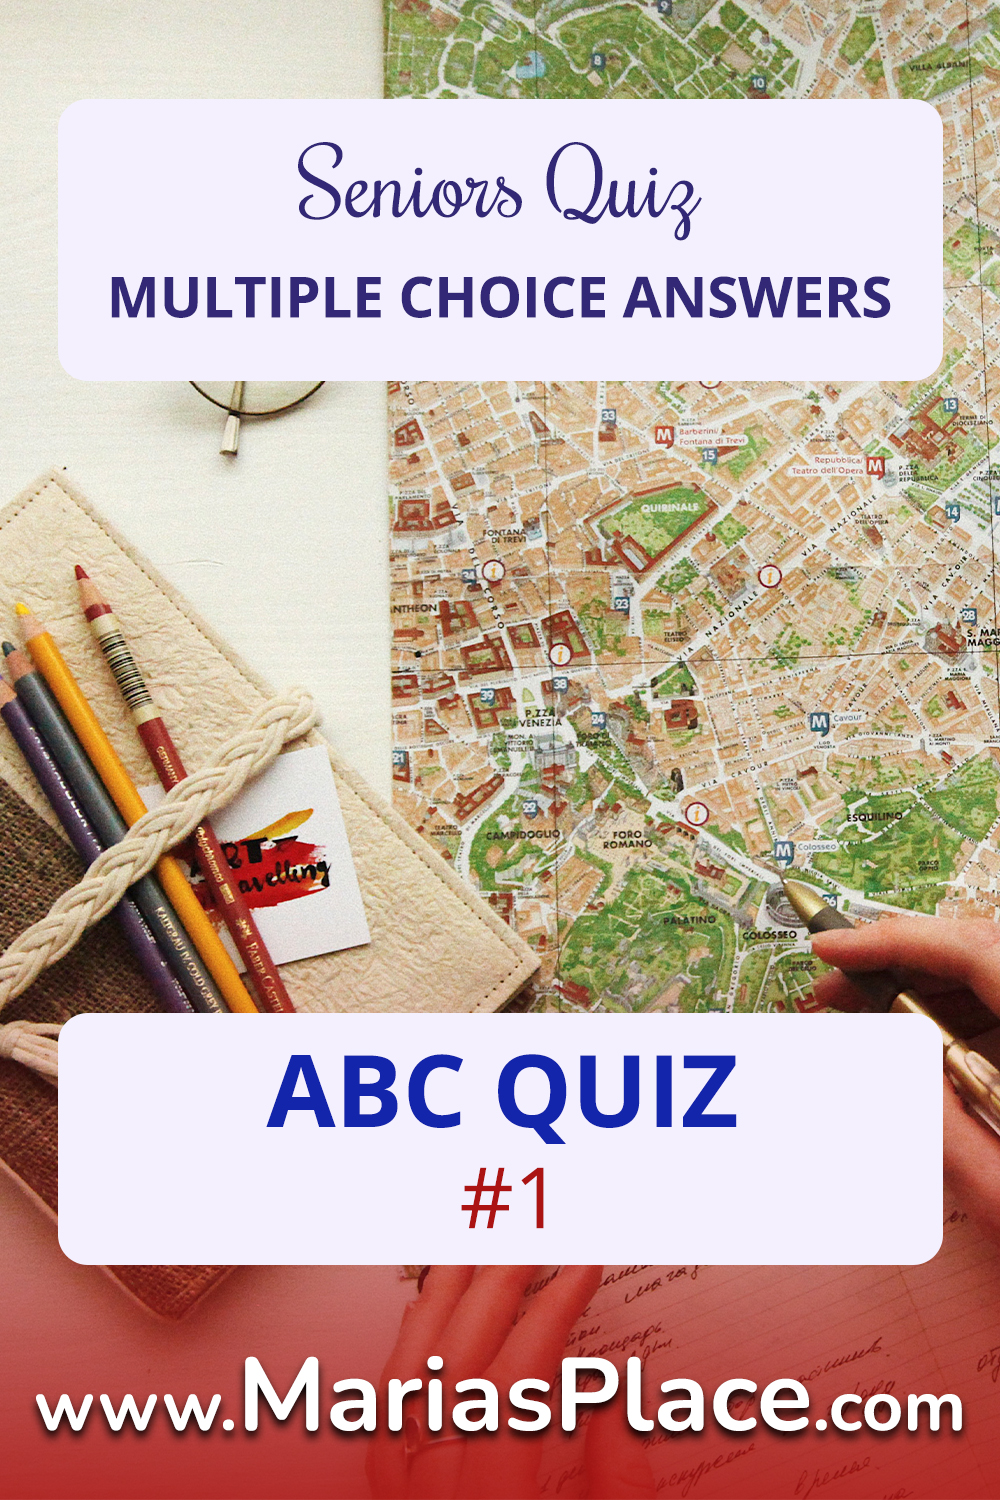 ABC Quiz #1